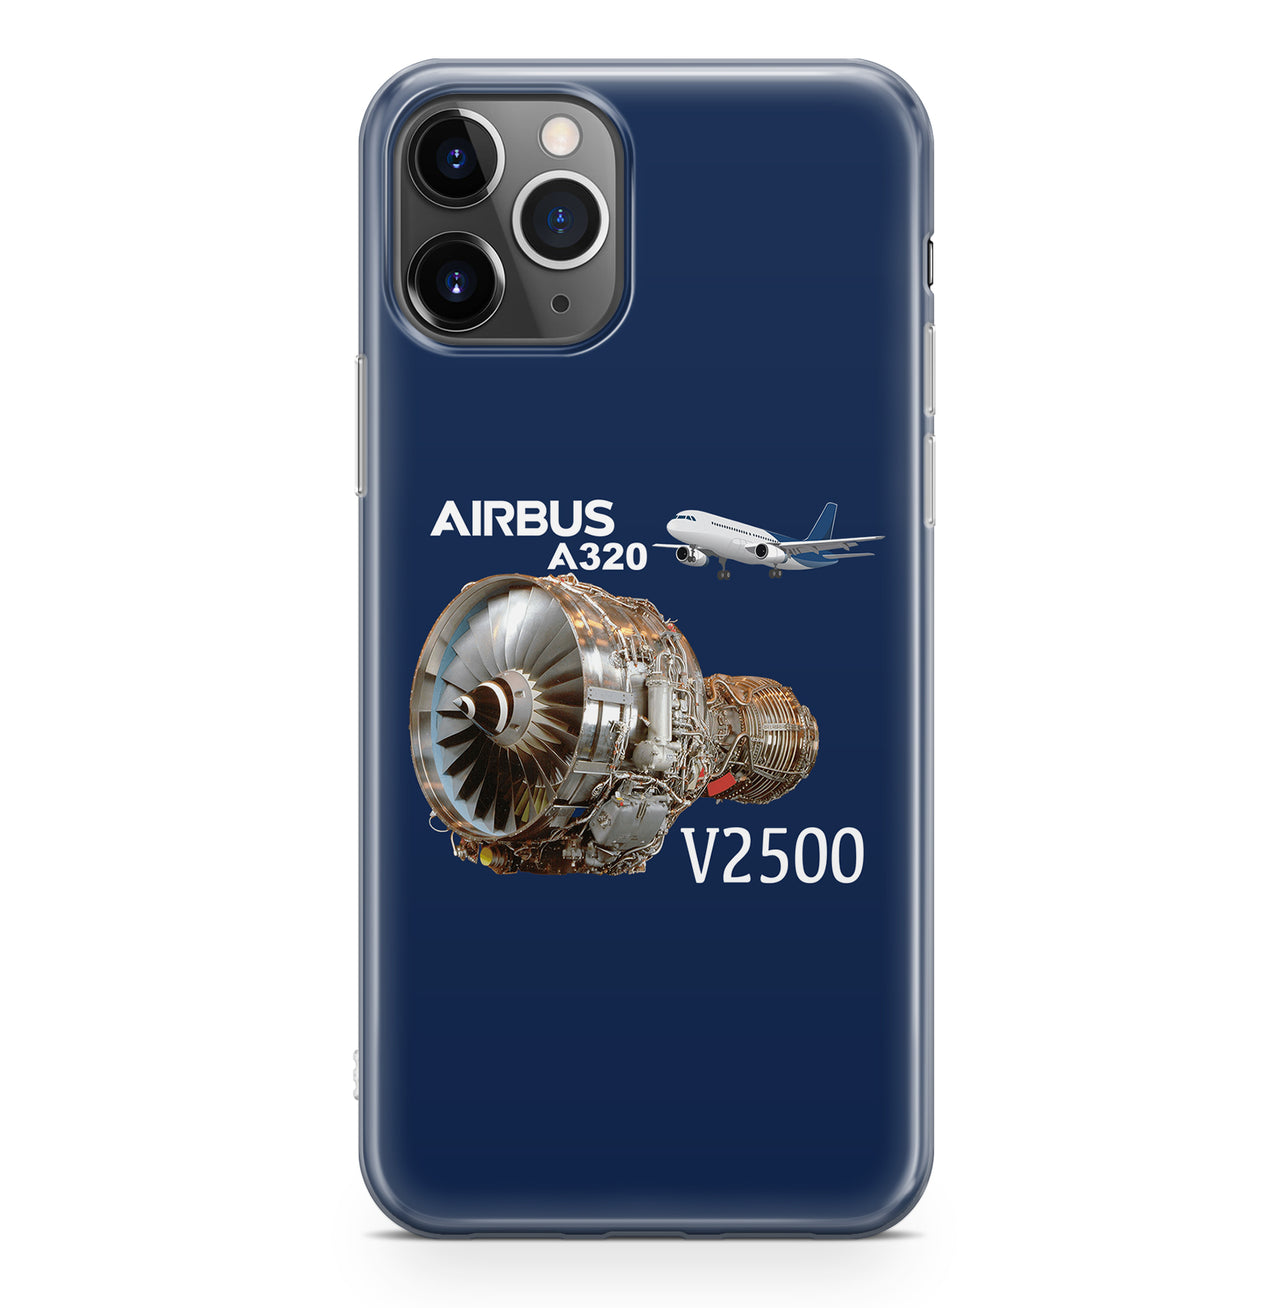 Airbus A320 & V2500 Engine Designed iPhone Cases